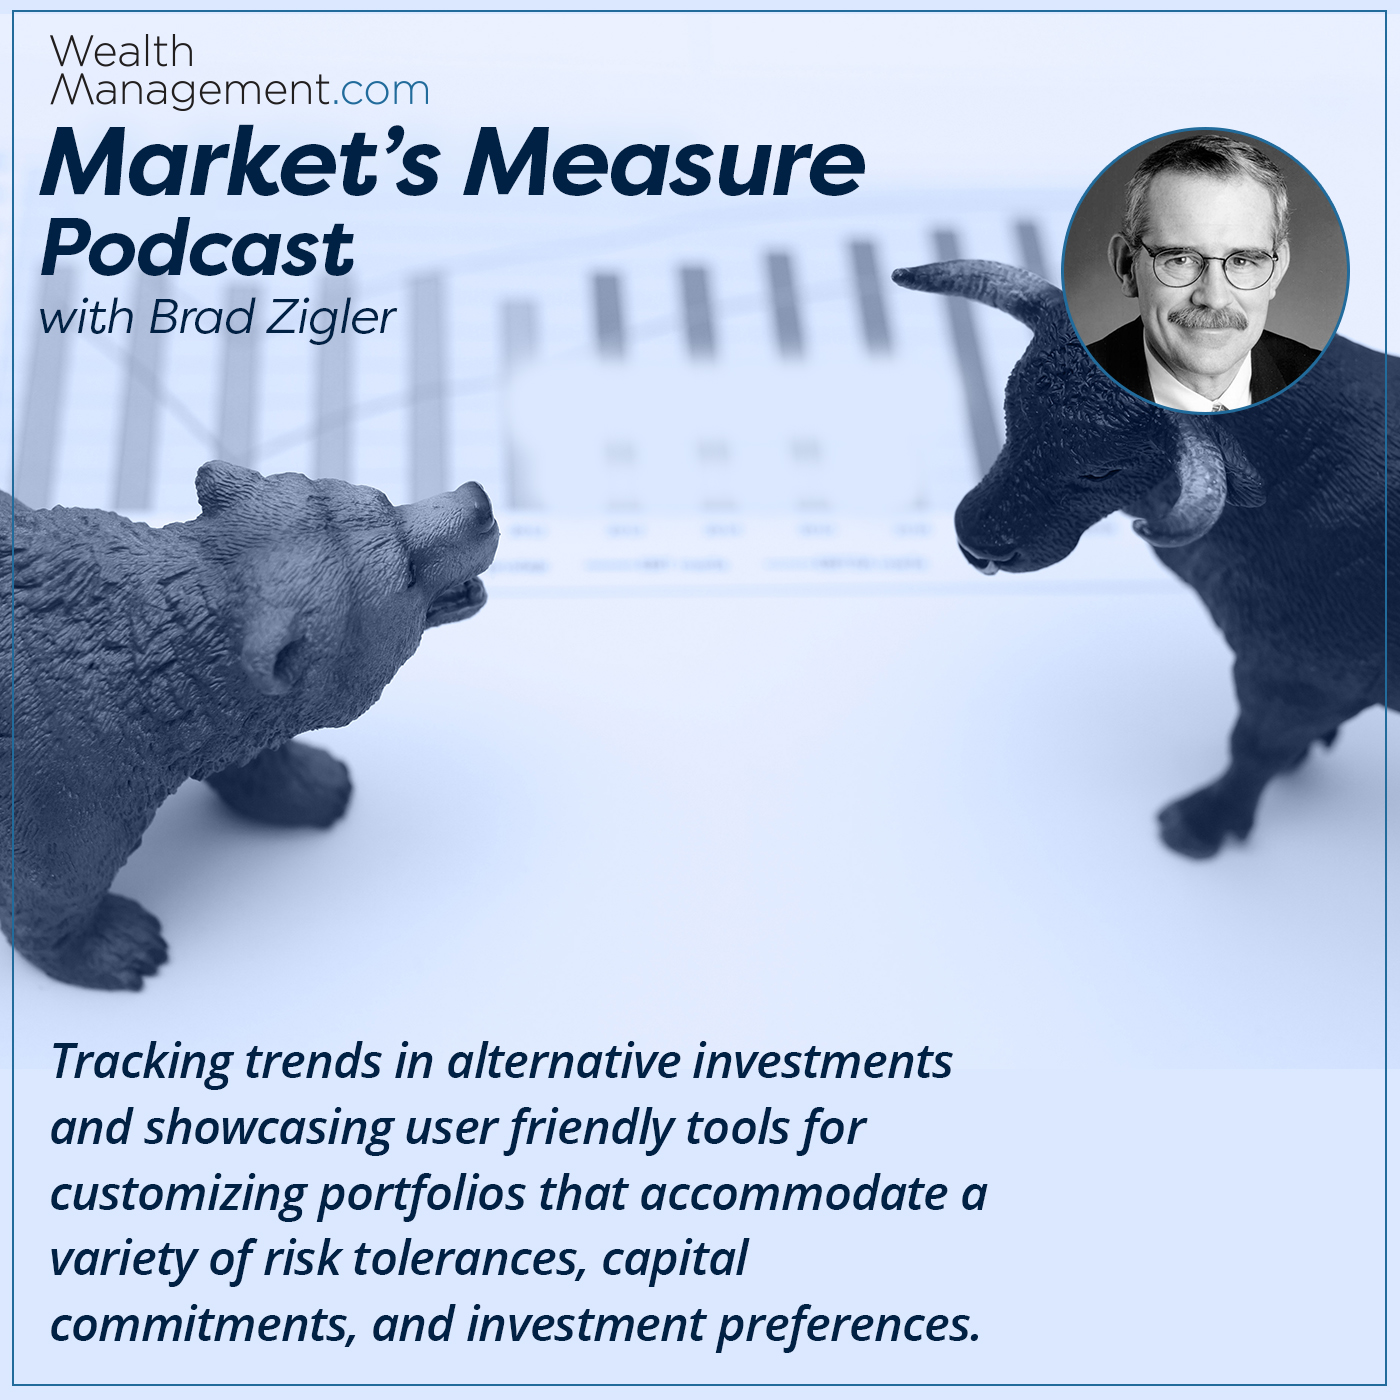 Market's Measure Podcast with Brad Zigler